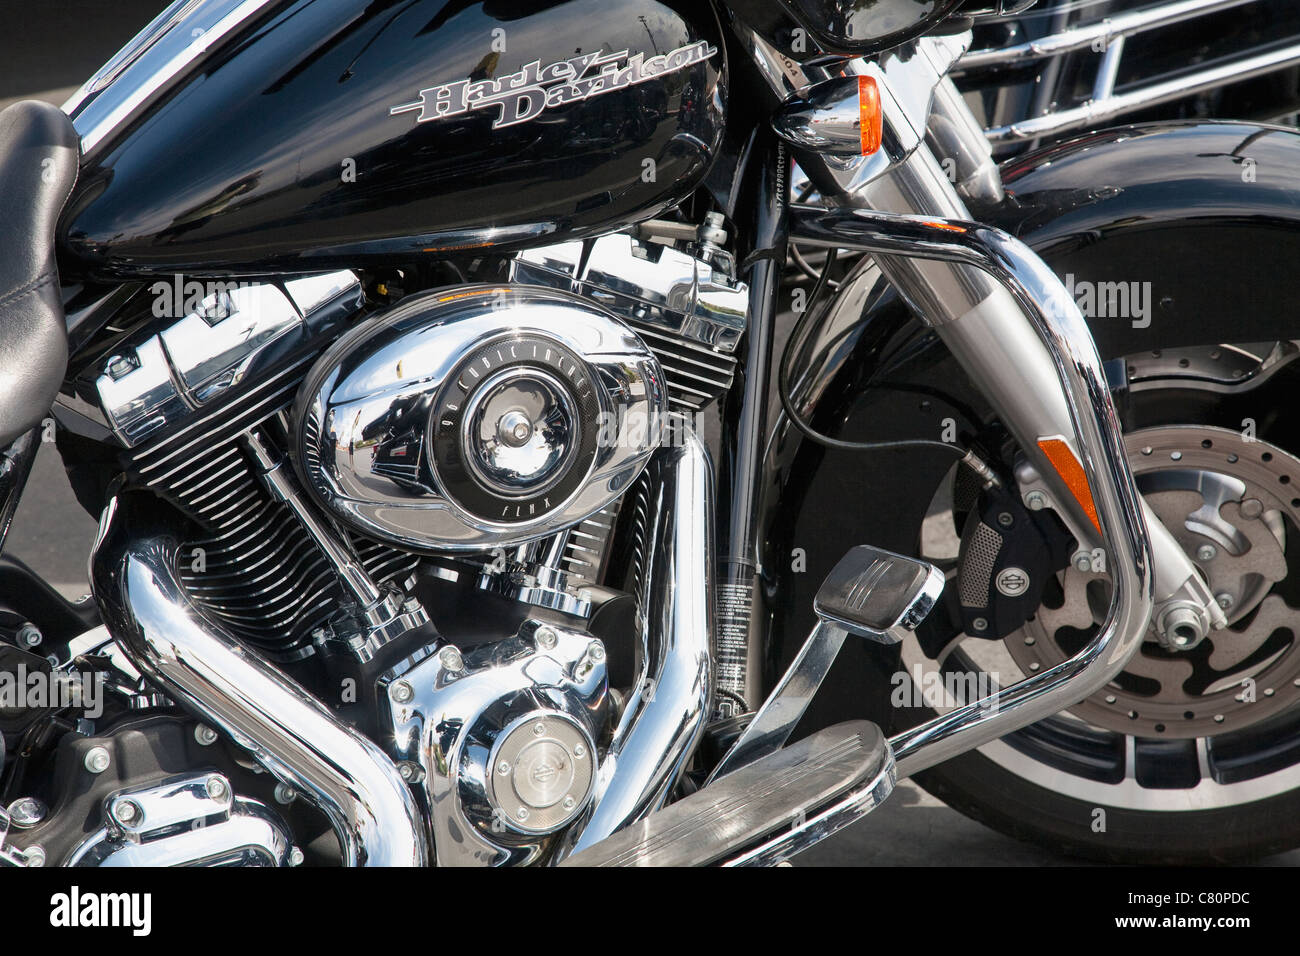 Harley Davidson Motorrad Stockfoto